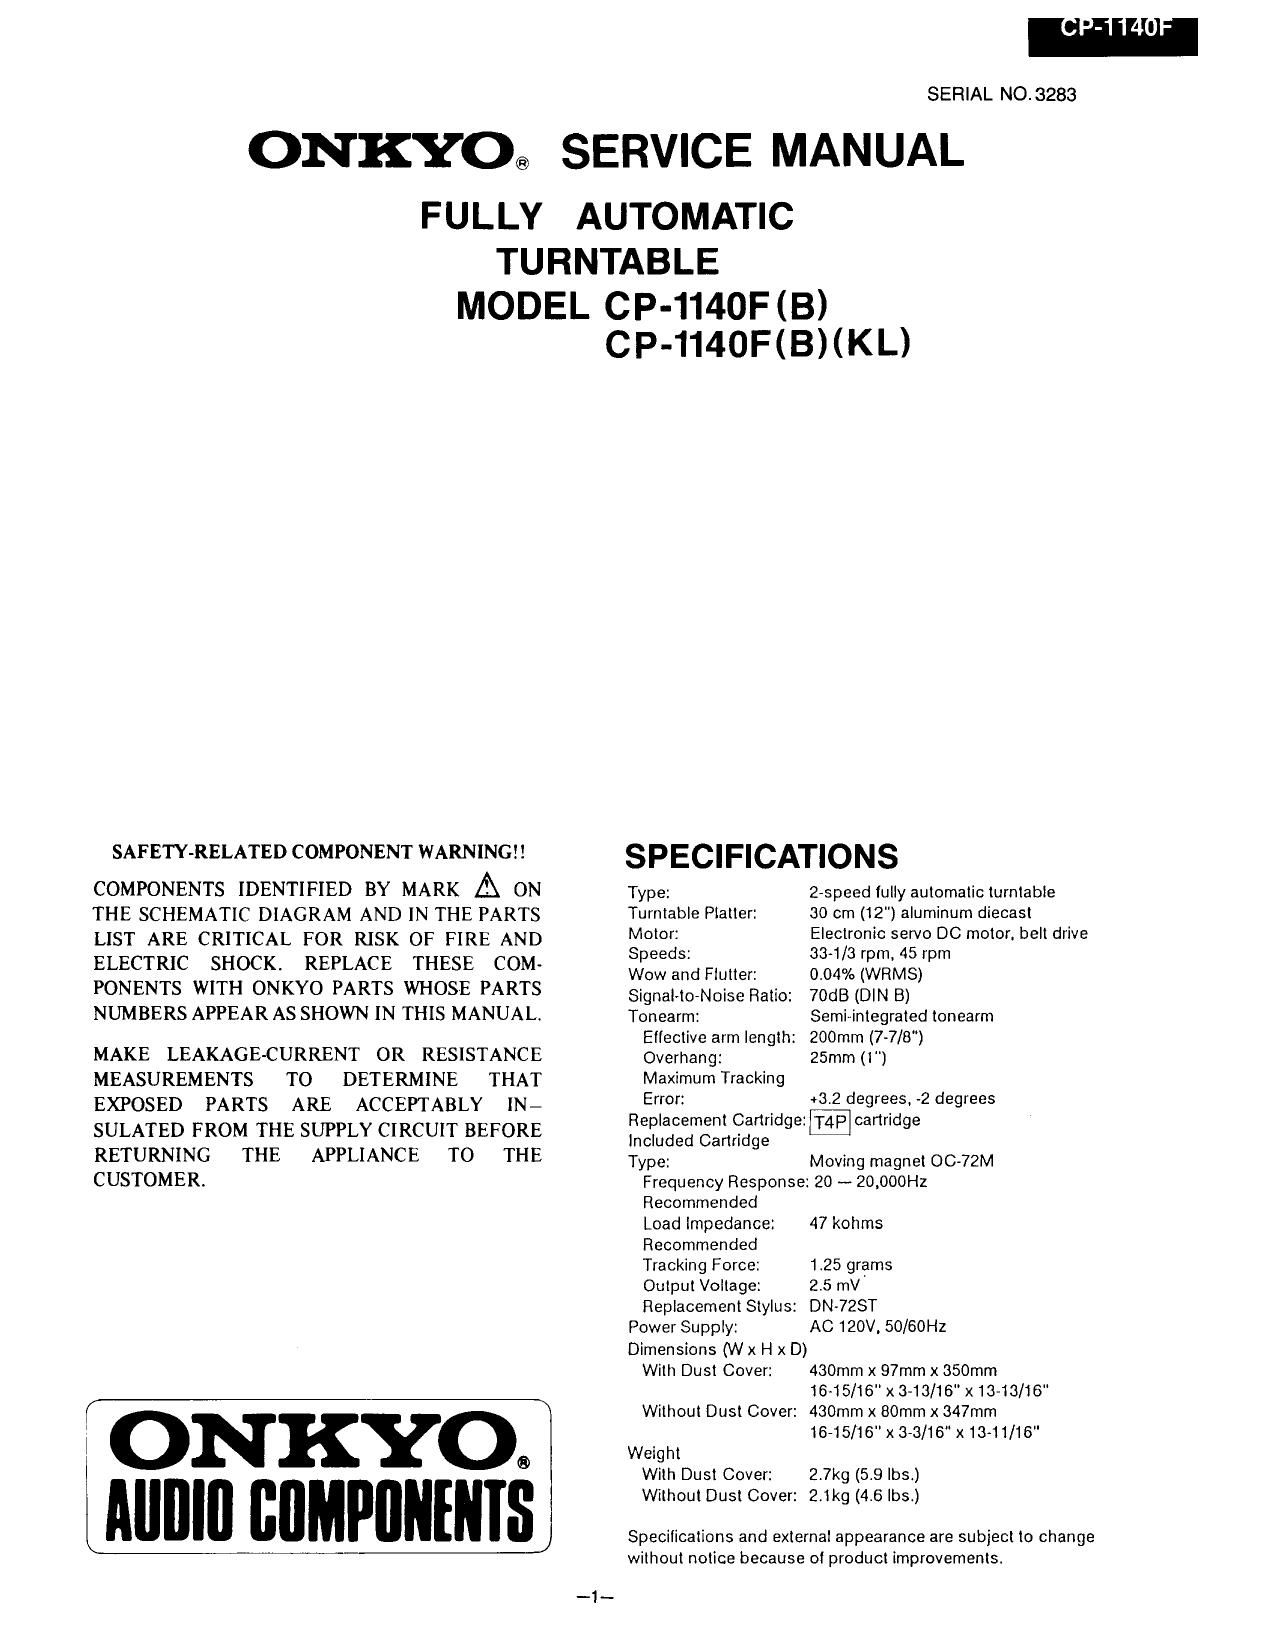 Onkyo CP 1140 F Service Manual